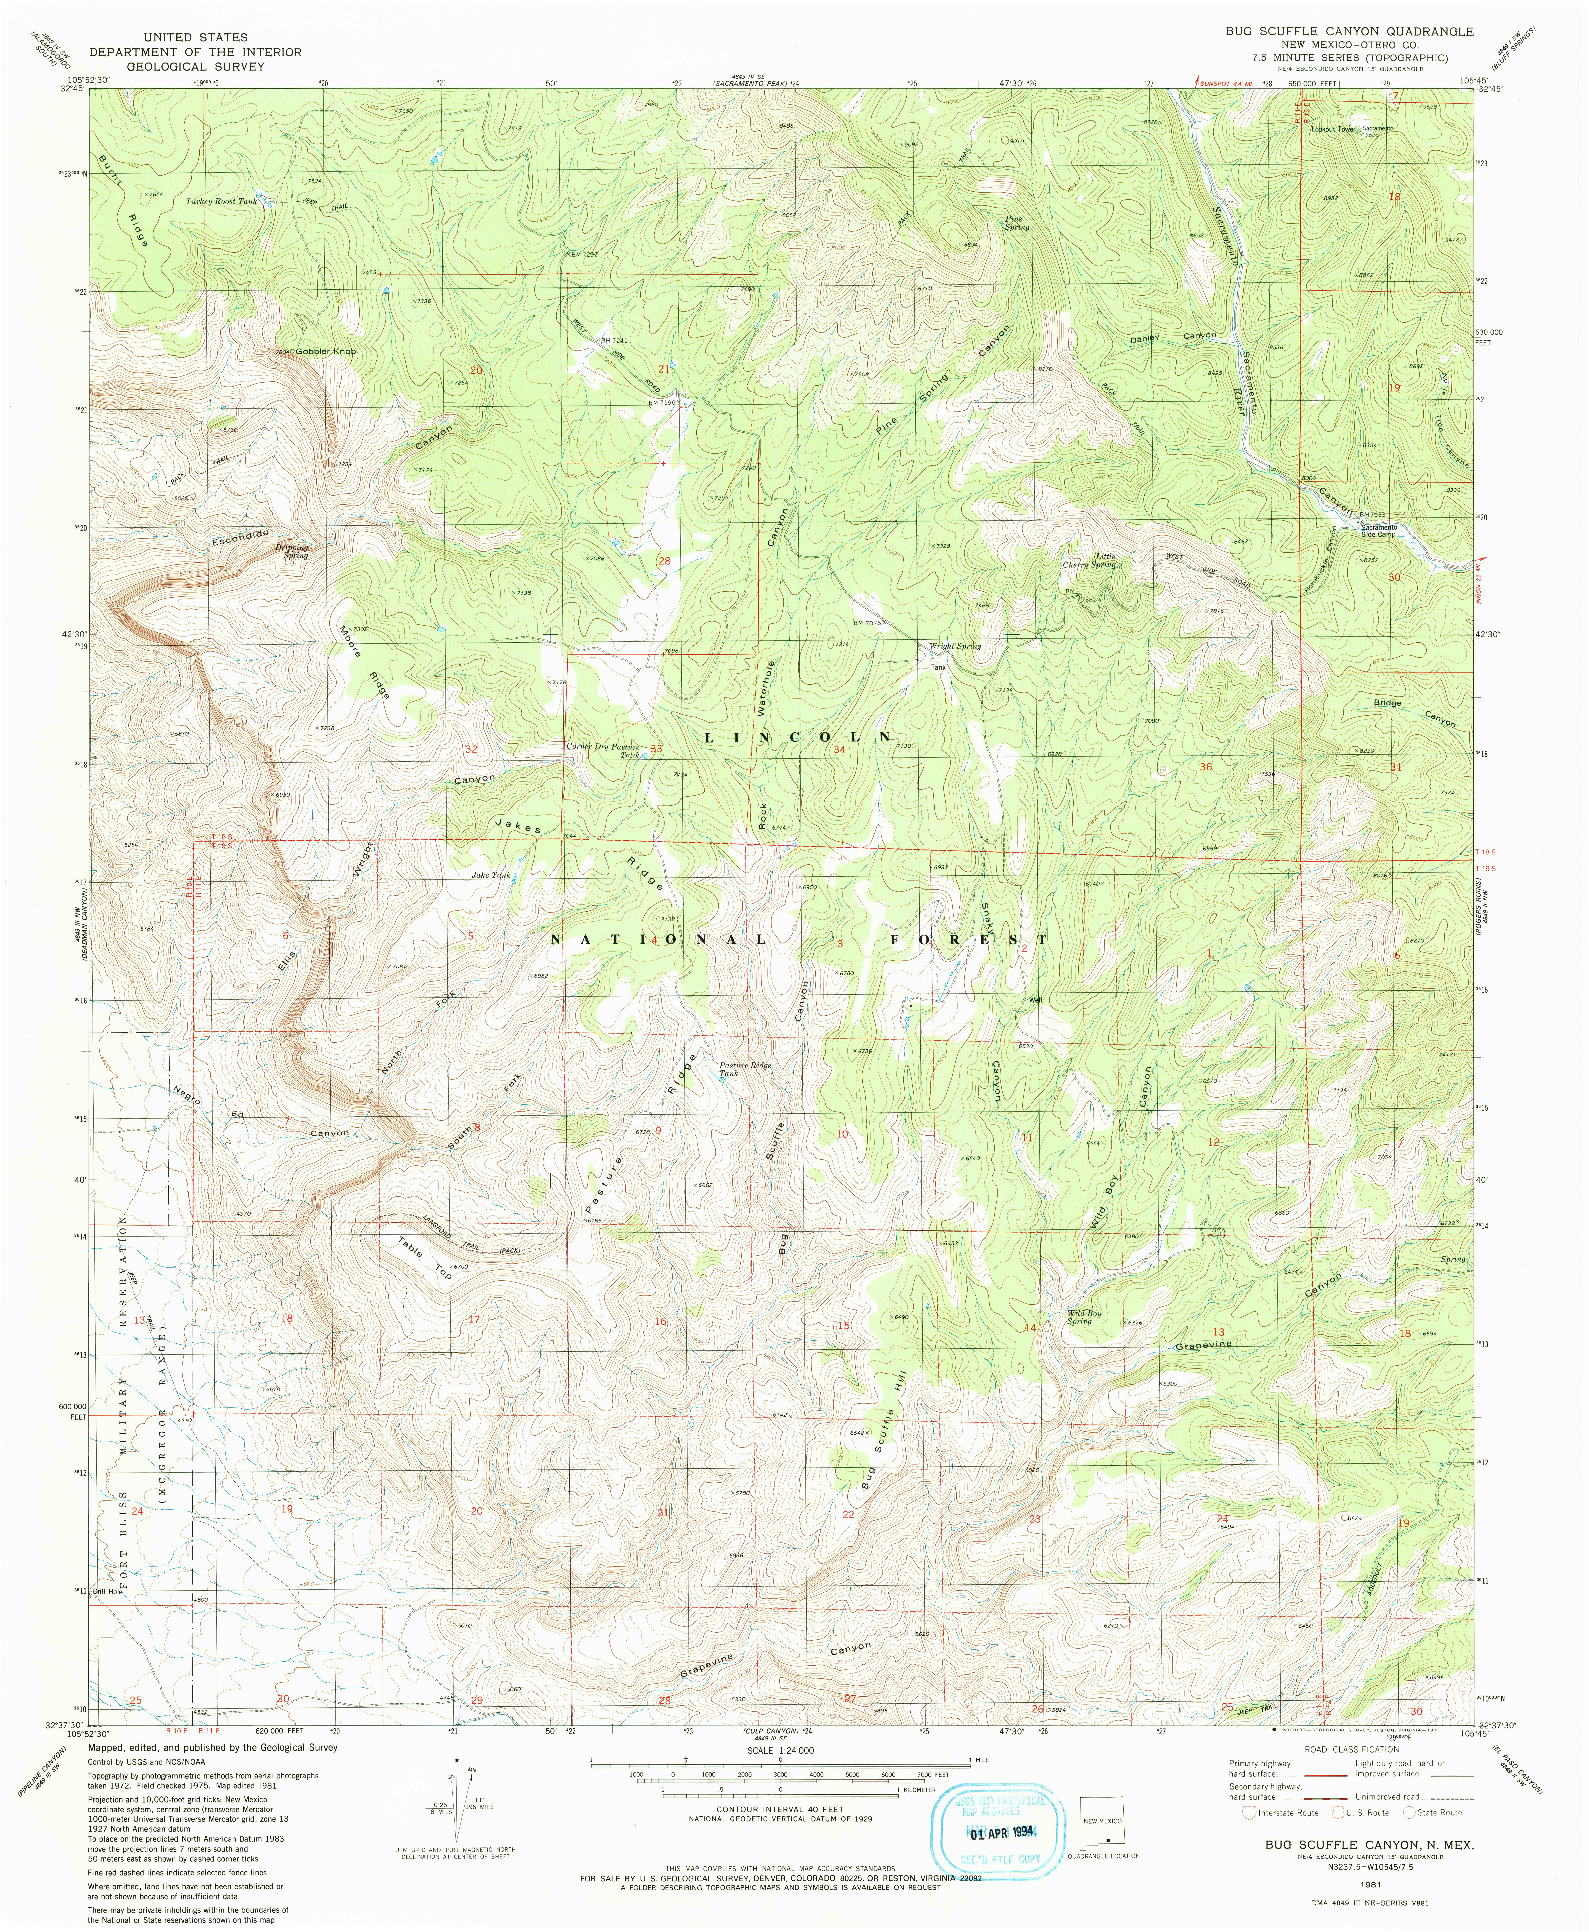 USGS 1:24000-SCALE QUADRANGLE FOR BUG SCUFFLE CANYON, NM 1981